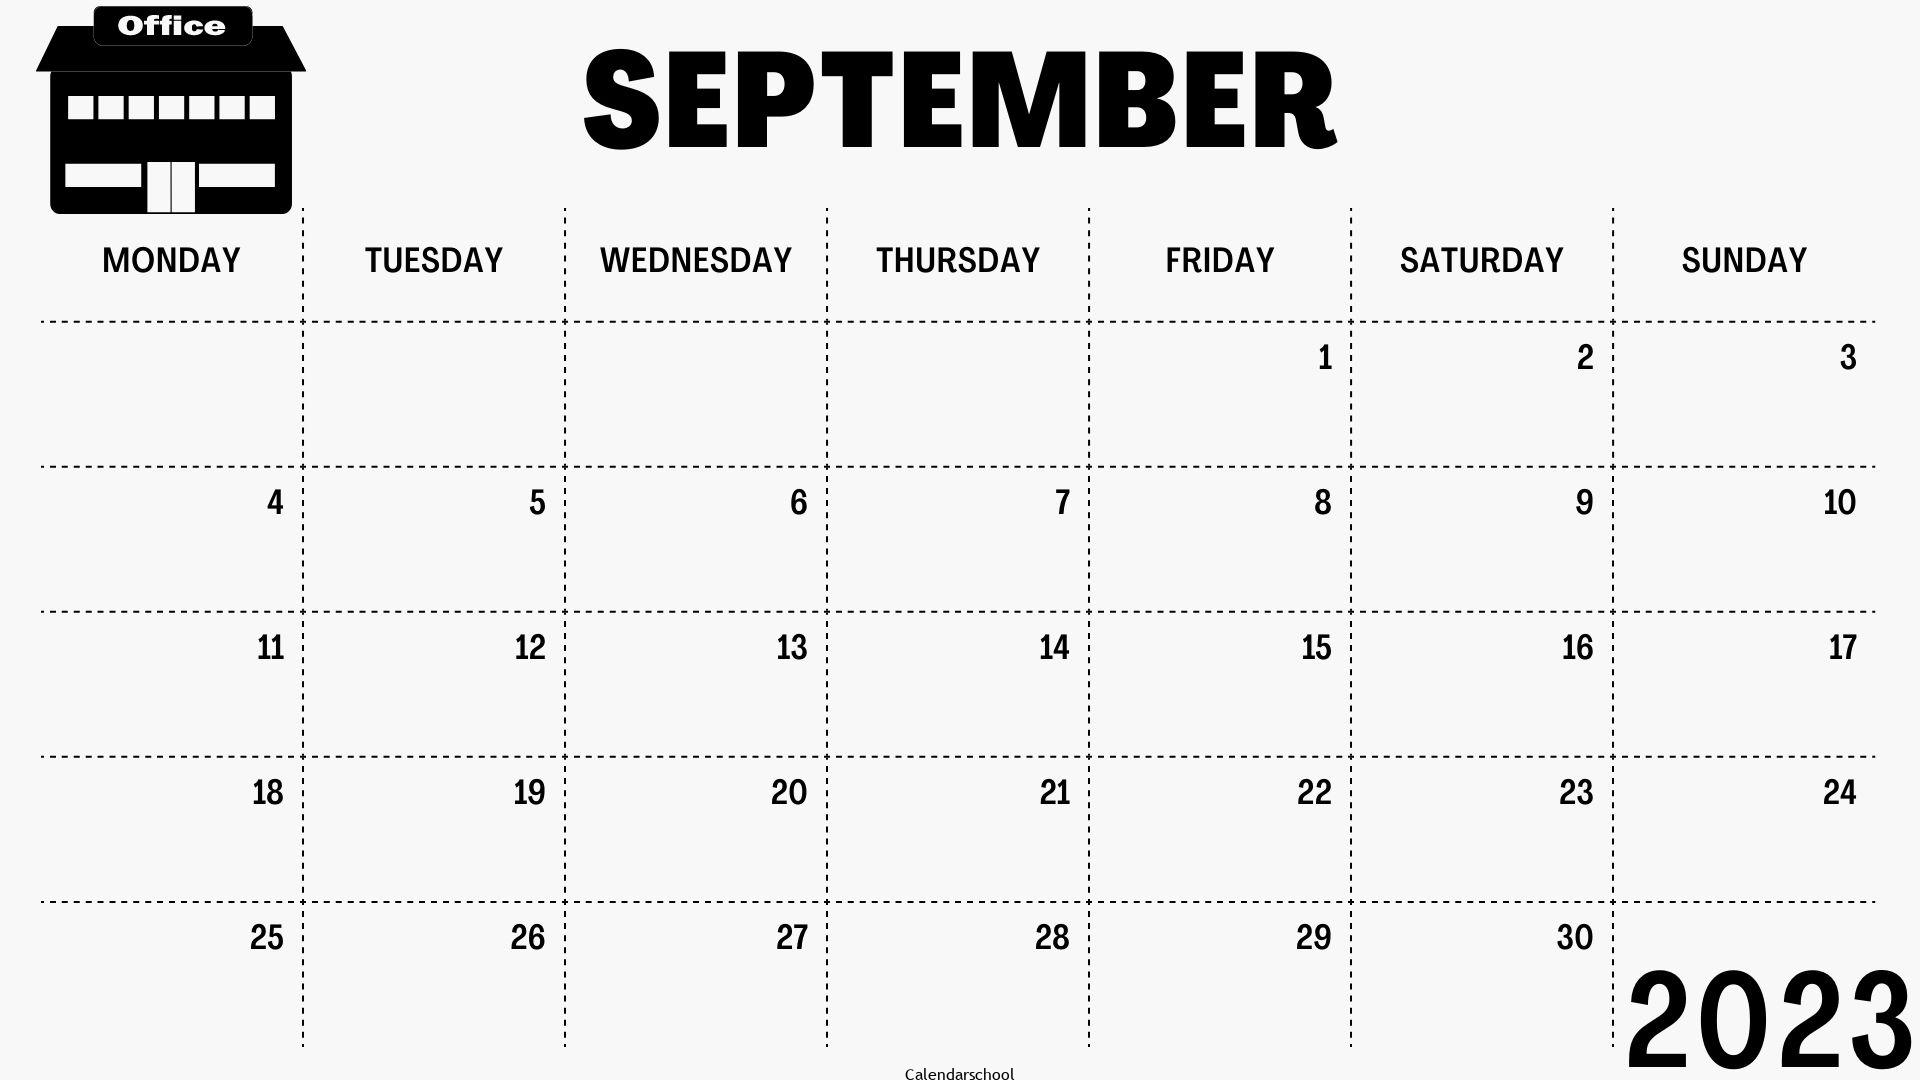 Calendar September 2023 With Festivals